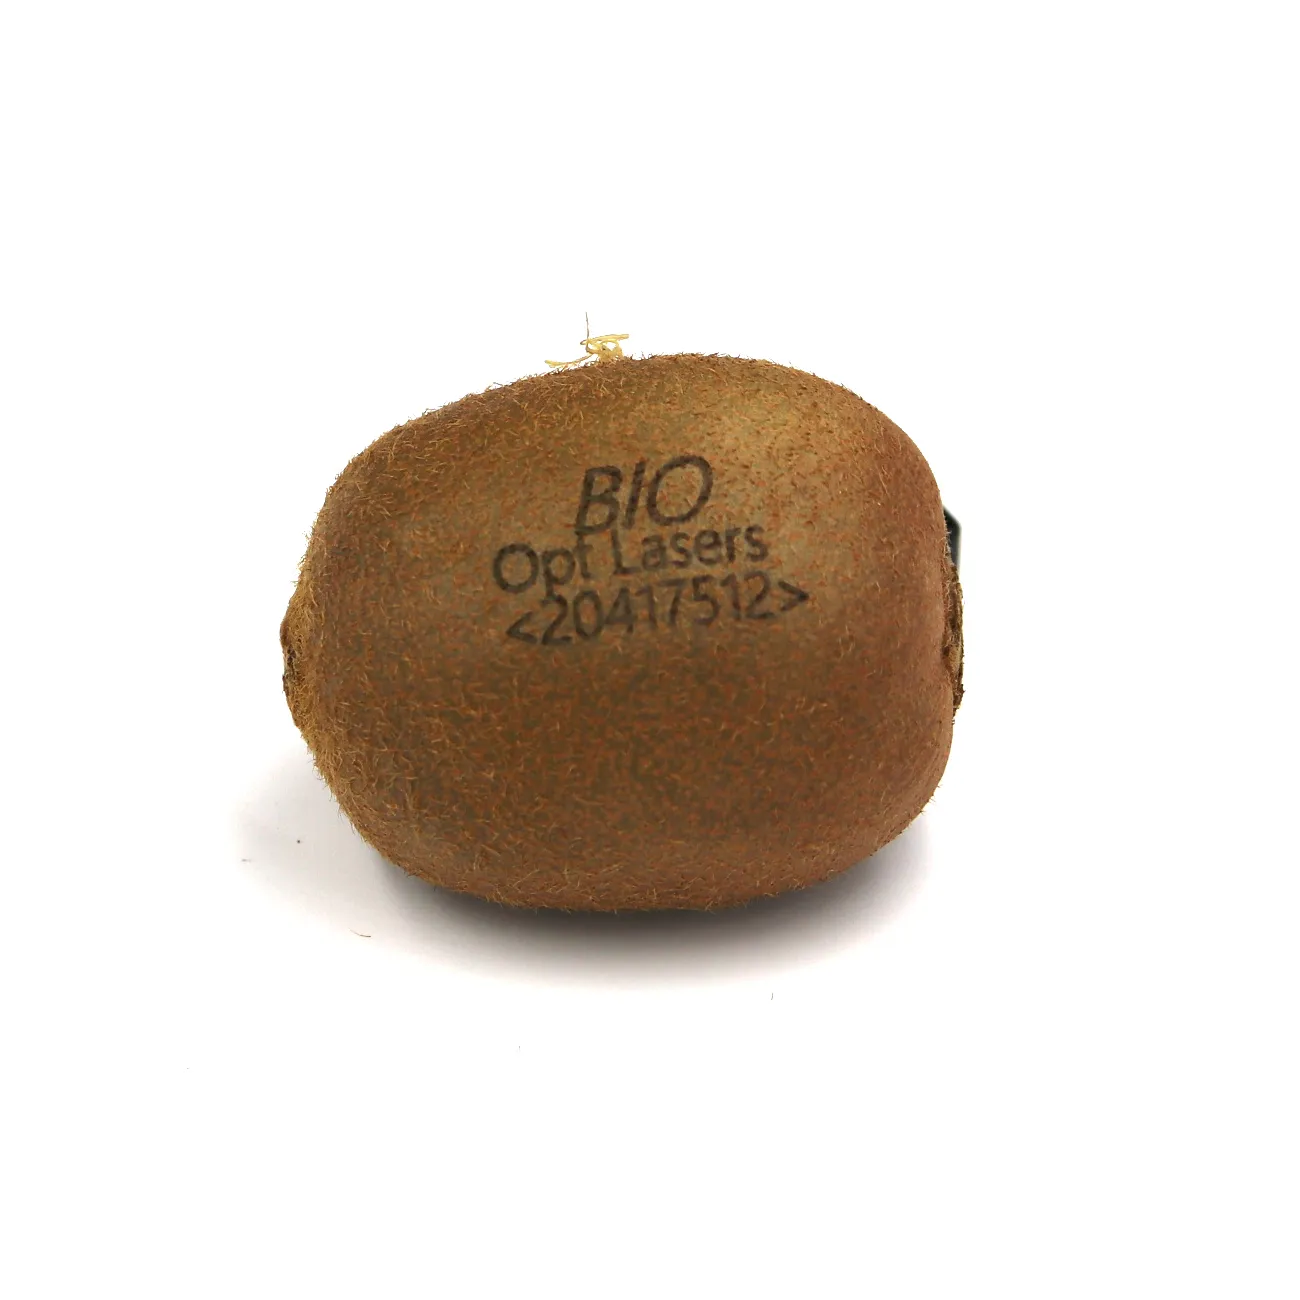 Organic Kiwi Fruit Food Labeling Engraved with Laser Marking Machine